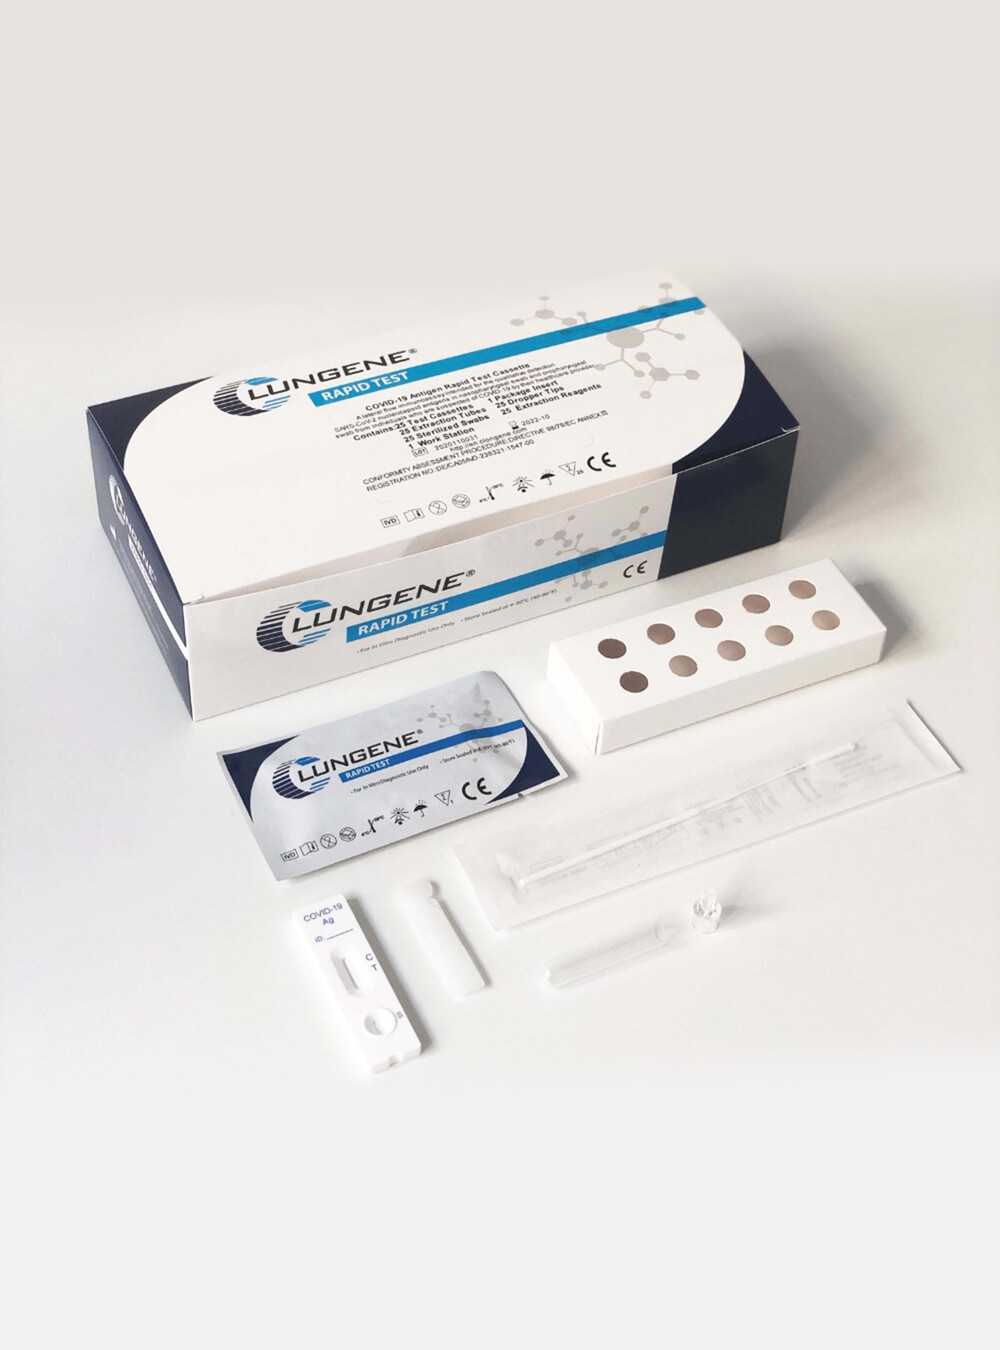 Antigen test kit